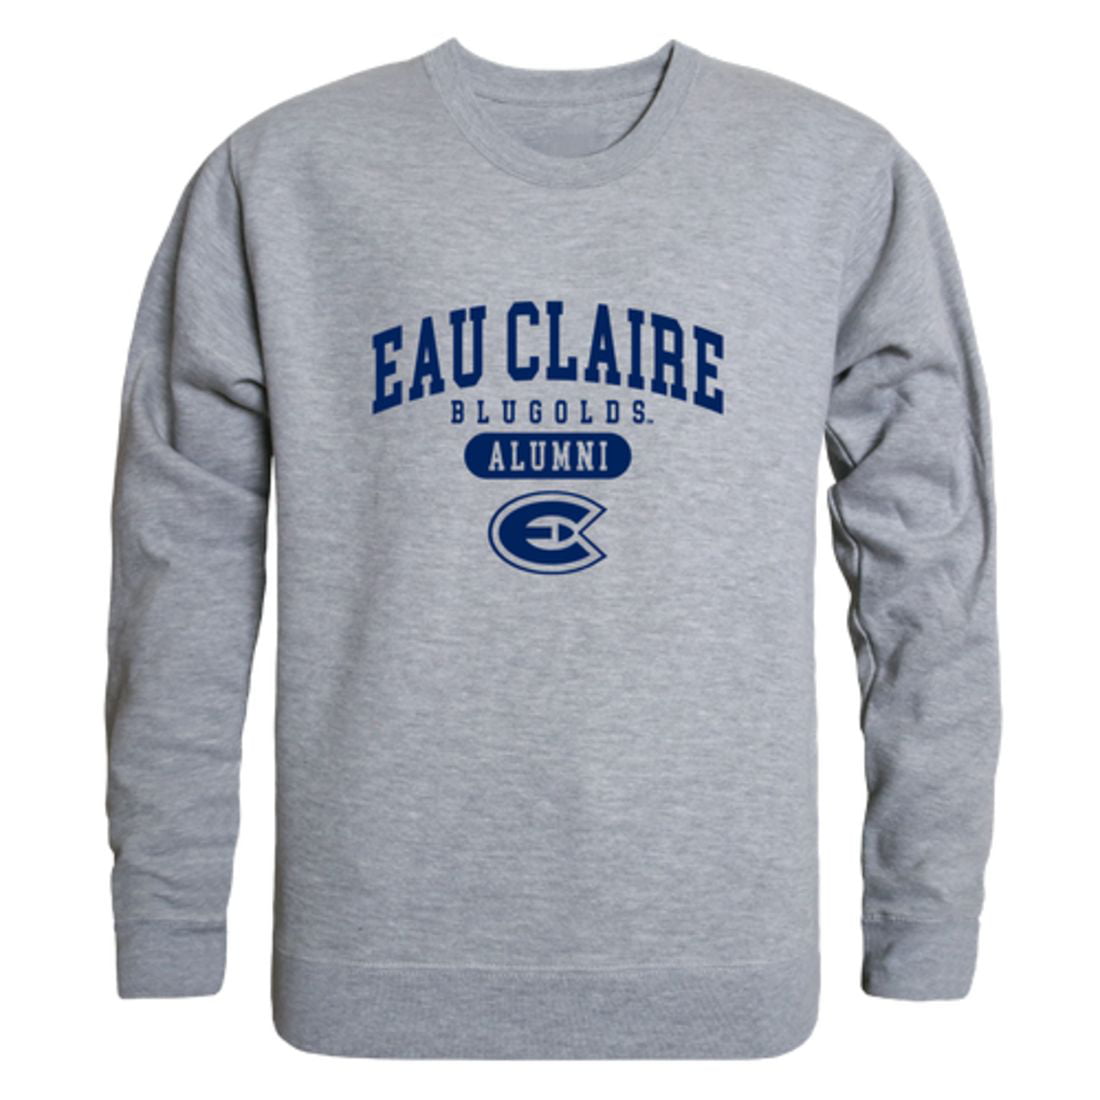 UWEC University of Wisconsin-Eau Claire Blugolds Established Crewneck Pullover Sweatshirt Sweater Navy 